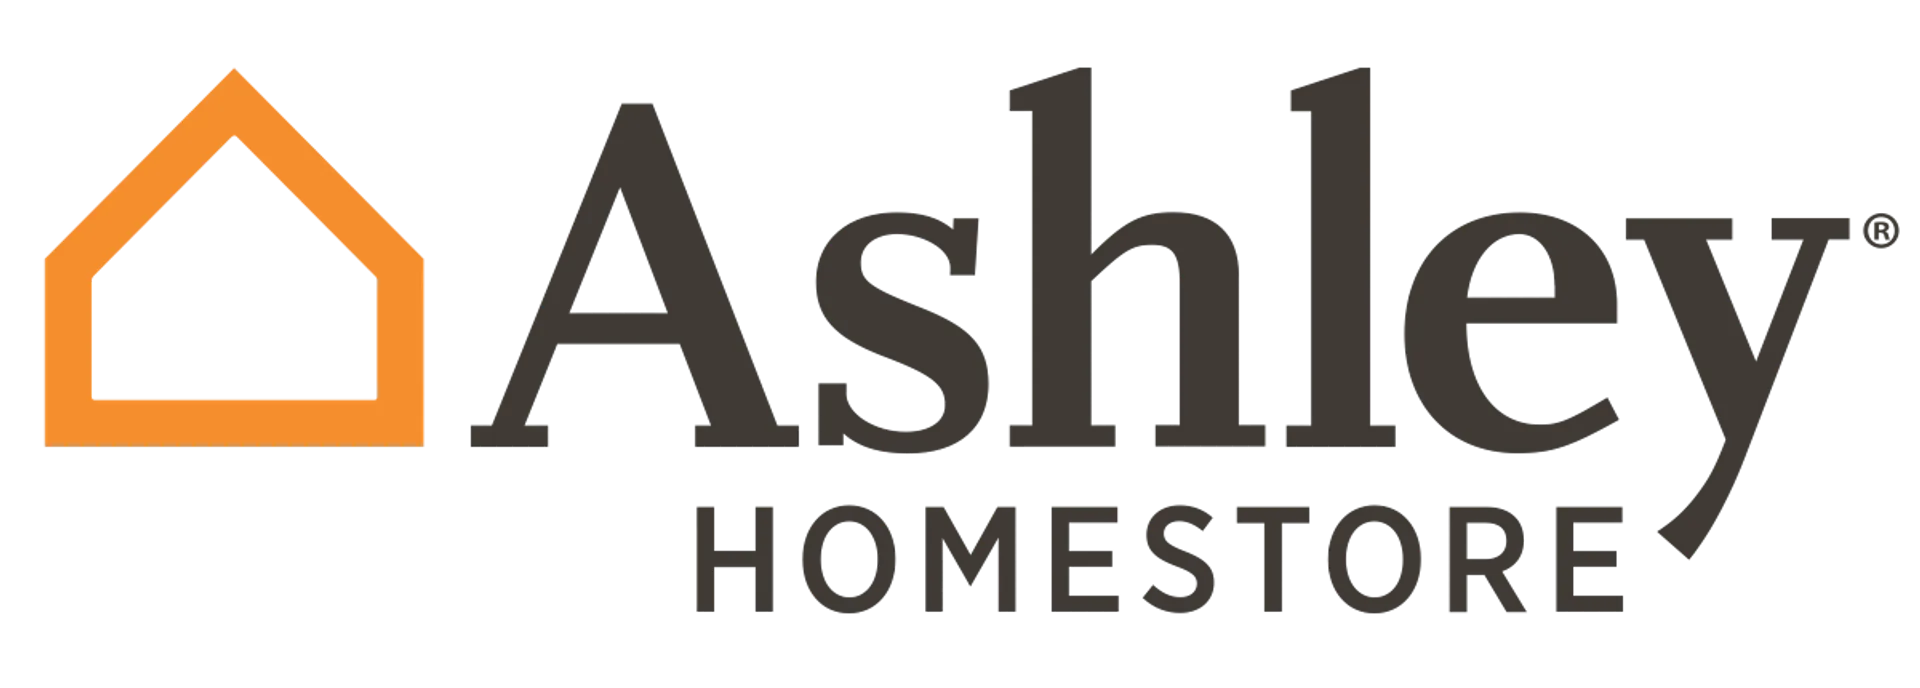 ASHLEY HOMESTORE logo. Current weekly ad